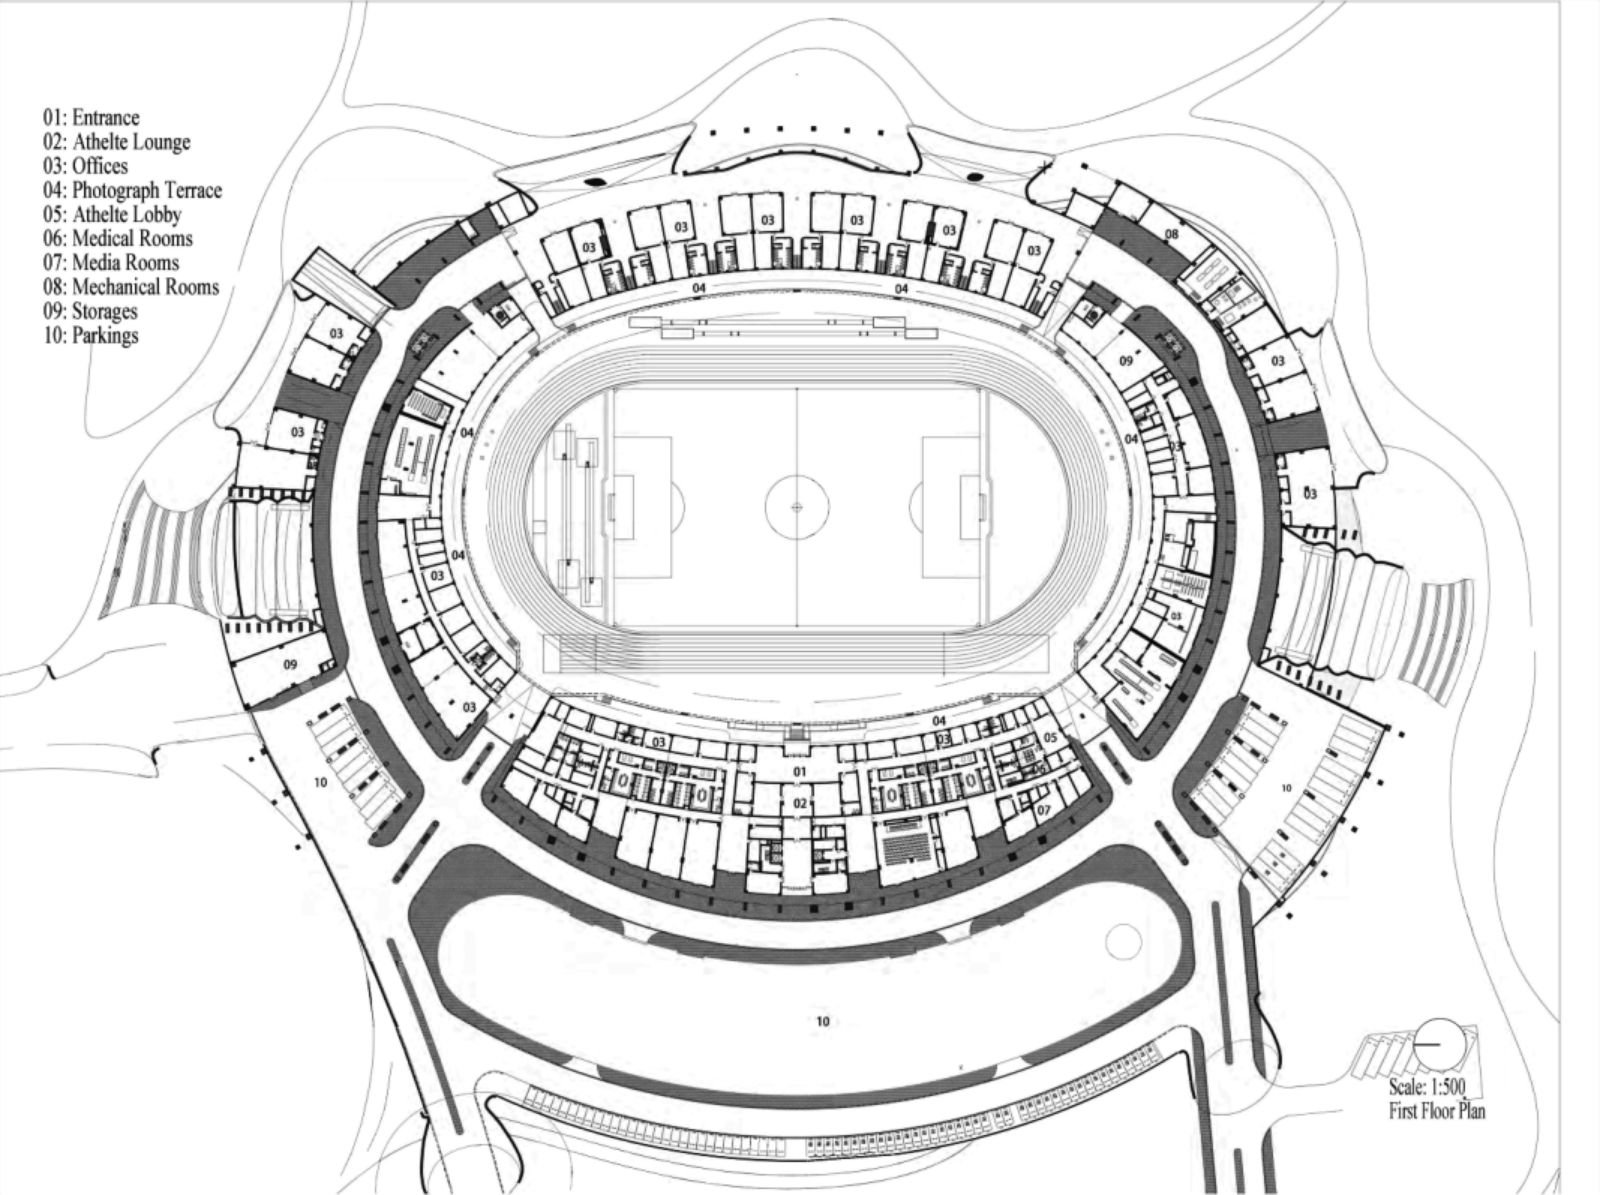 Stadium of Quzhou Sports Park